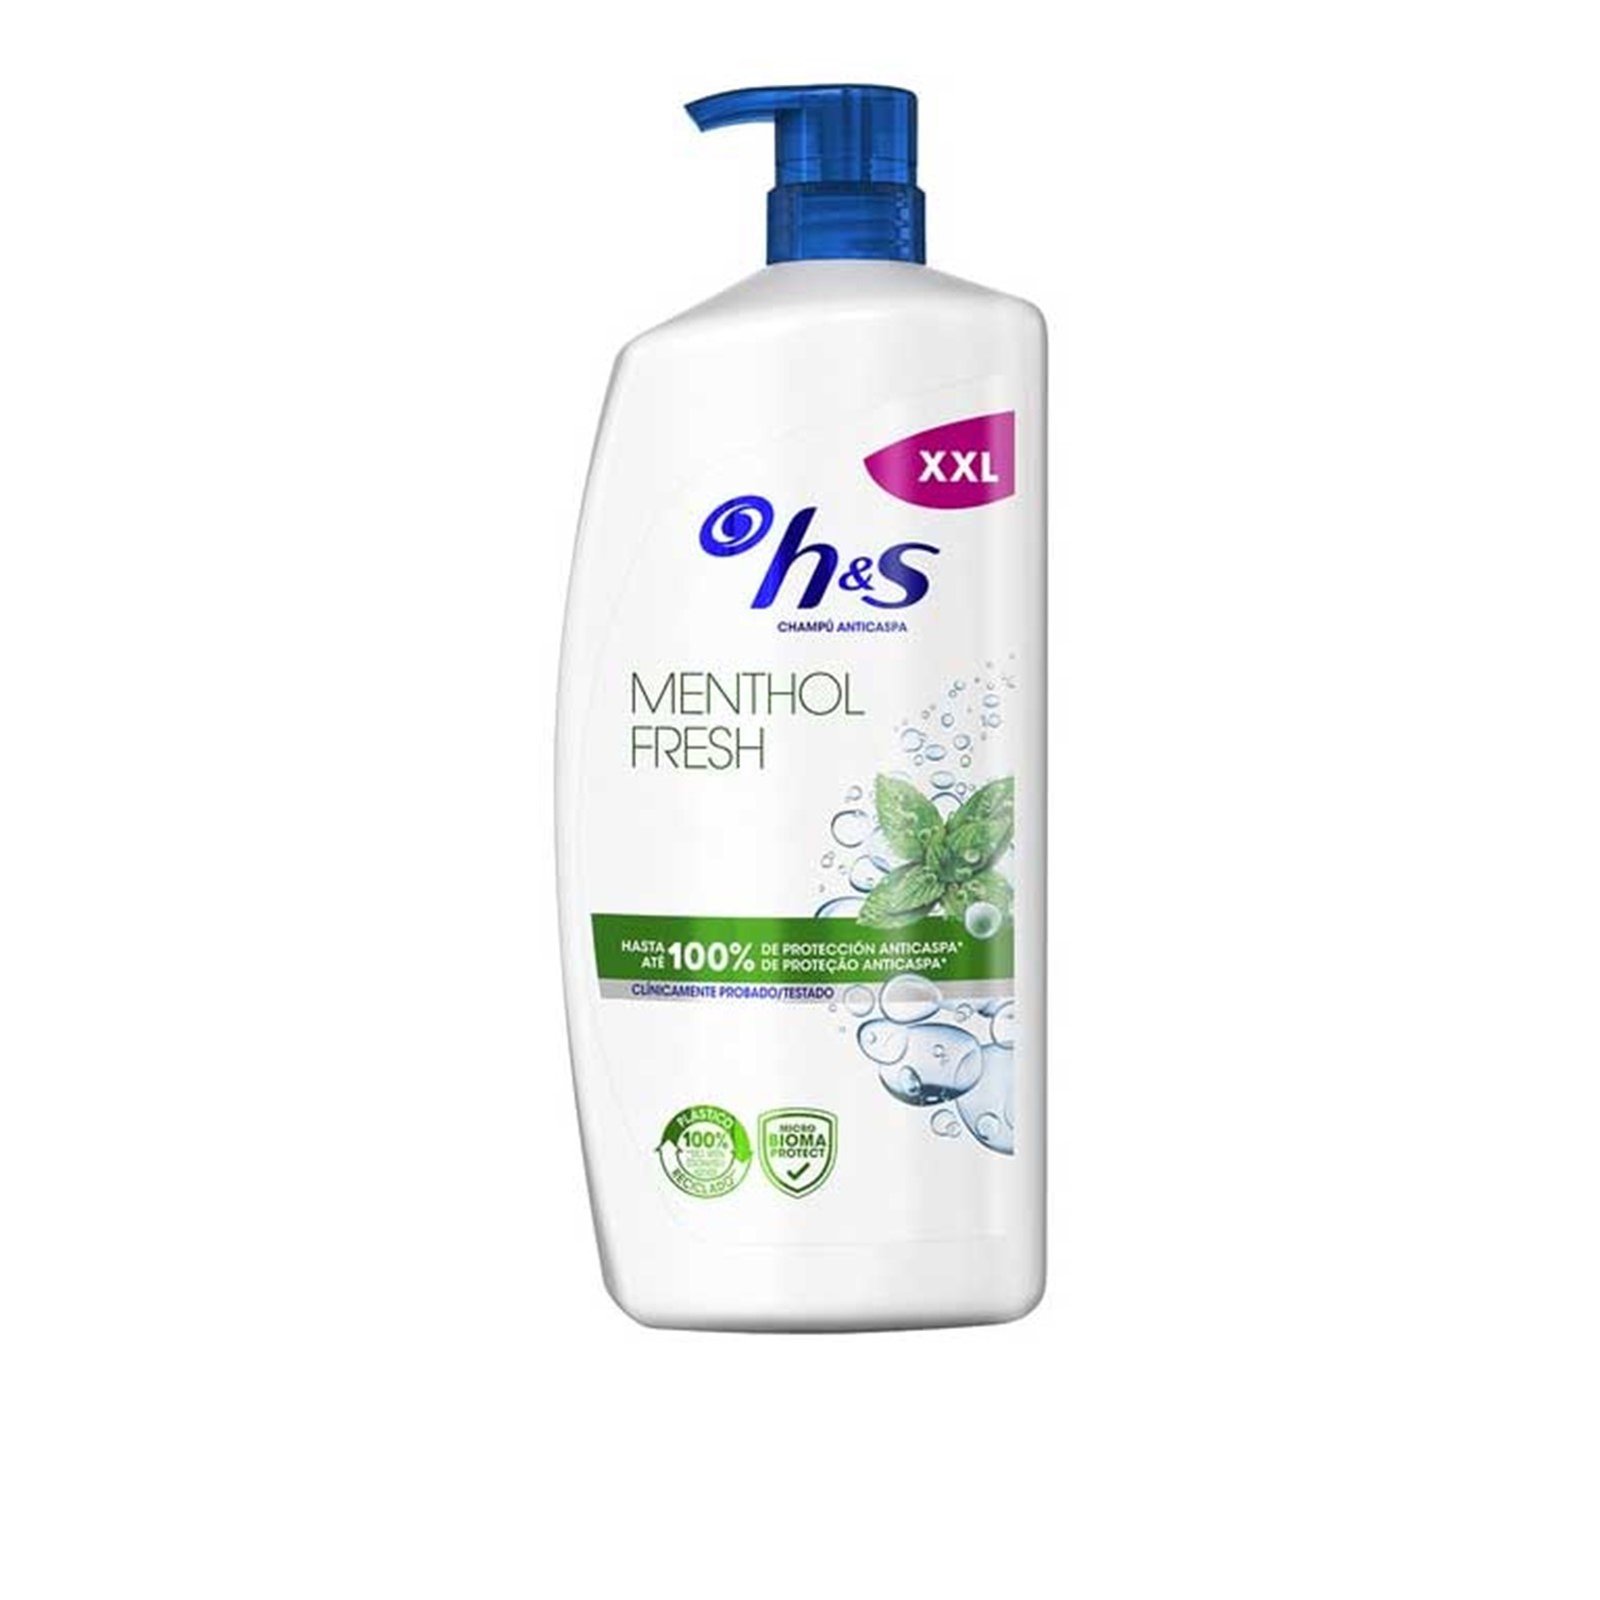 H&S Menthol Fresh Shampoo 1L (33.8 fl oz)